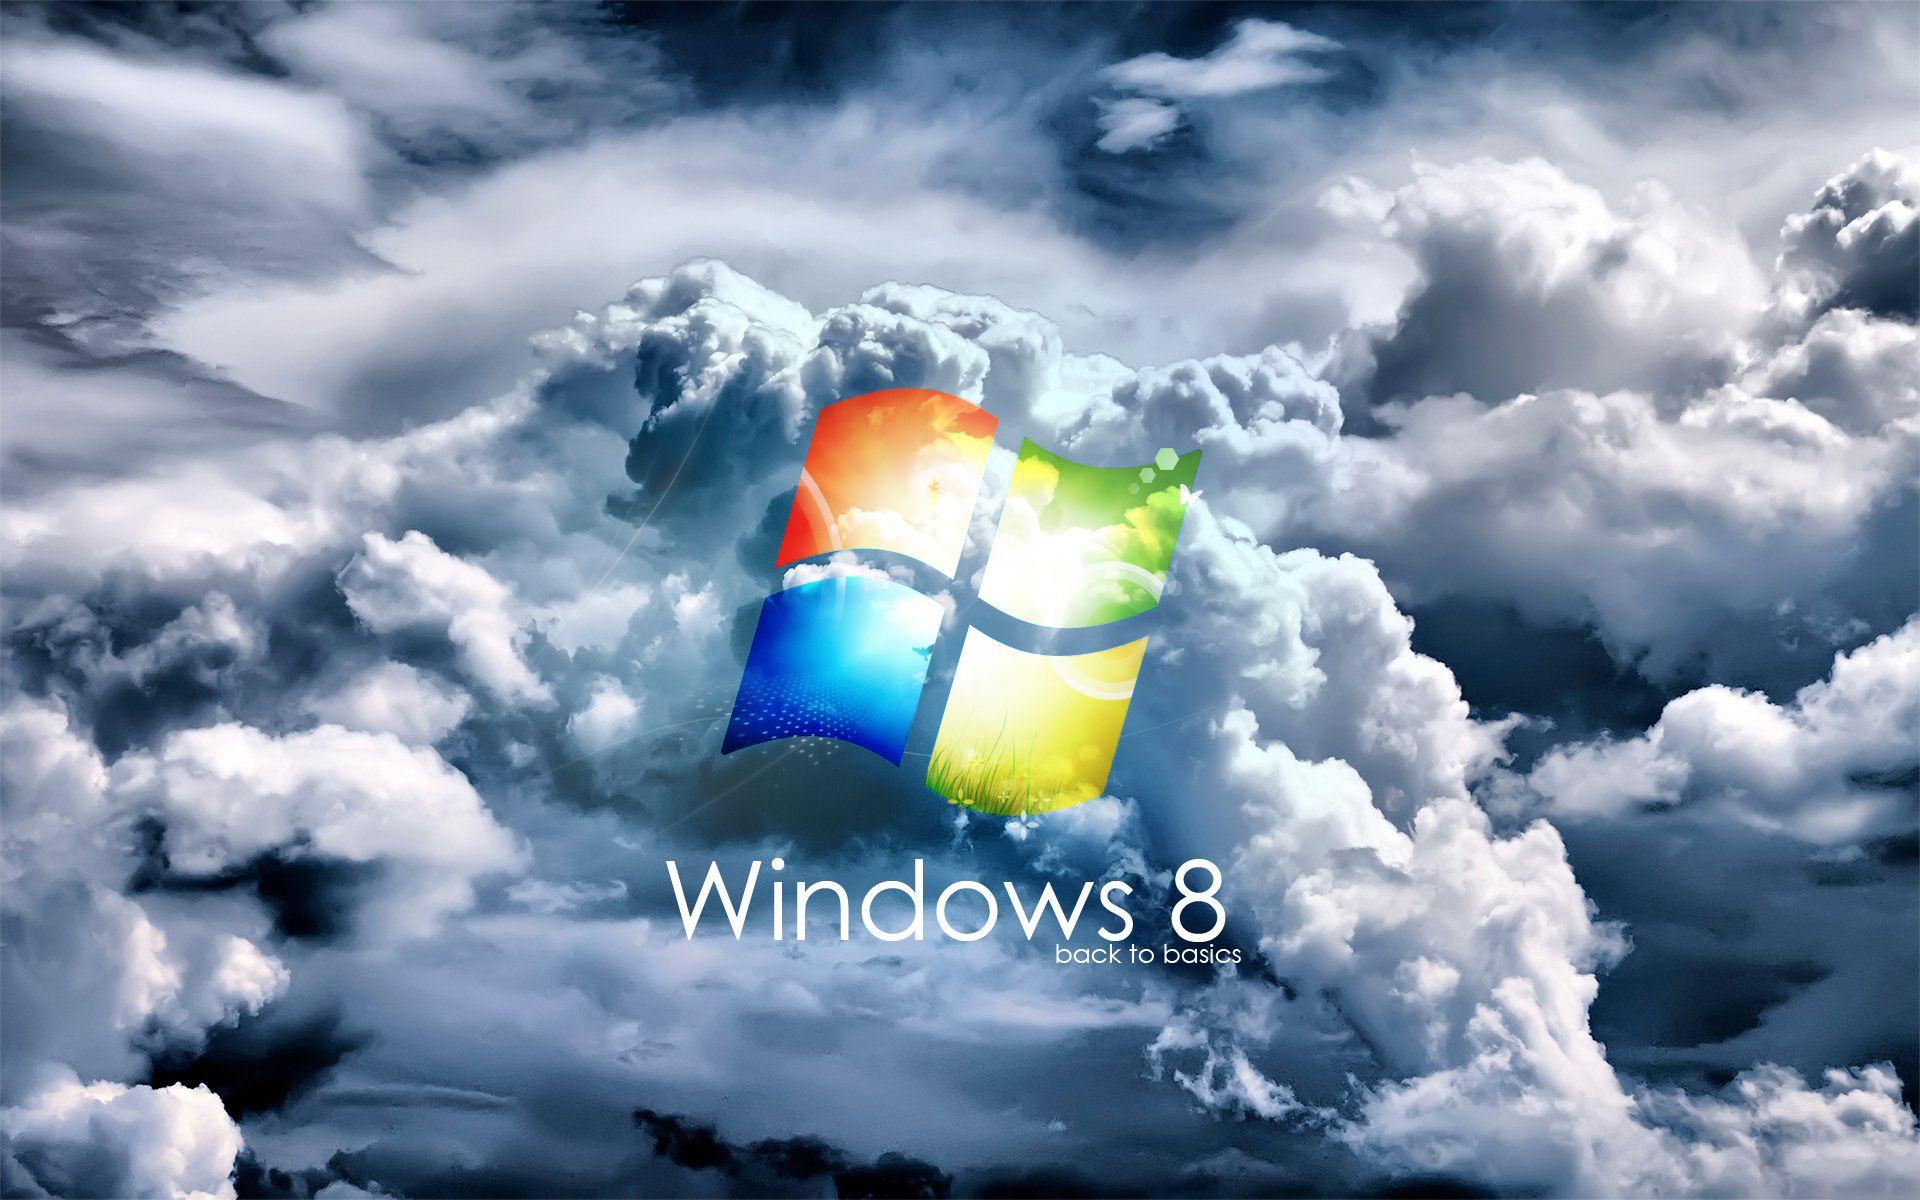 Windows 8 Wallpaper, Windows 8 Background, Windows 8 Free HD